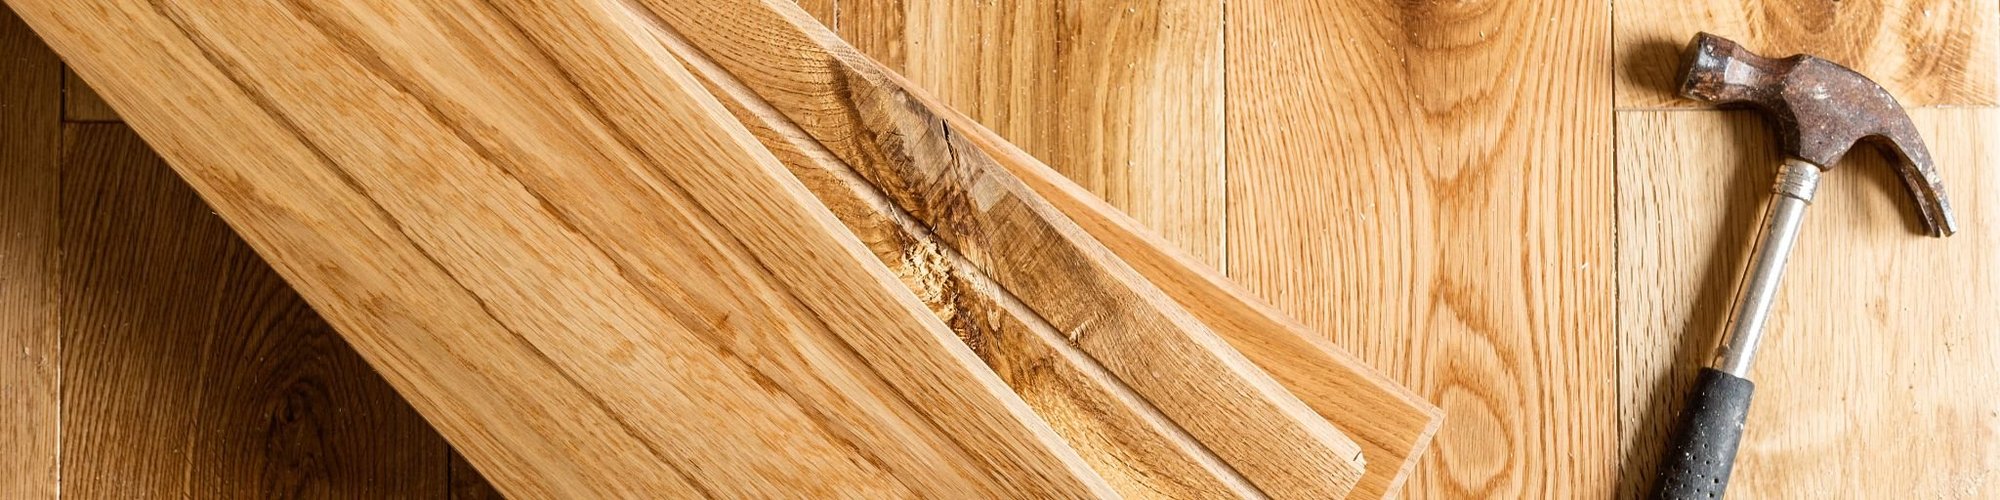 Hammer and hardwood - Mac's Custom Flooring in Redlands